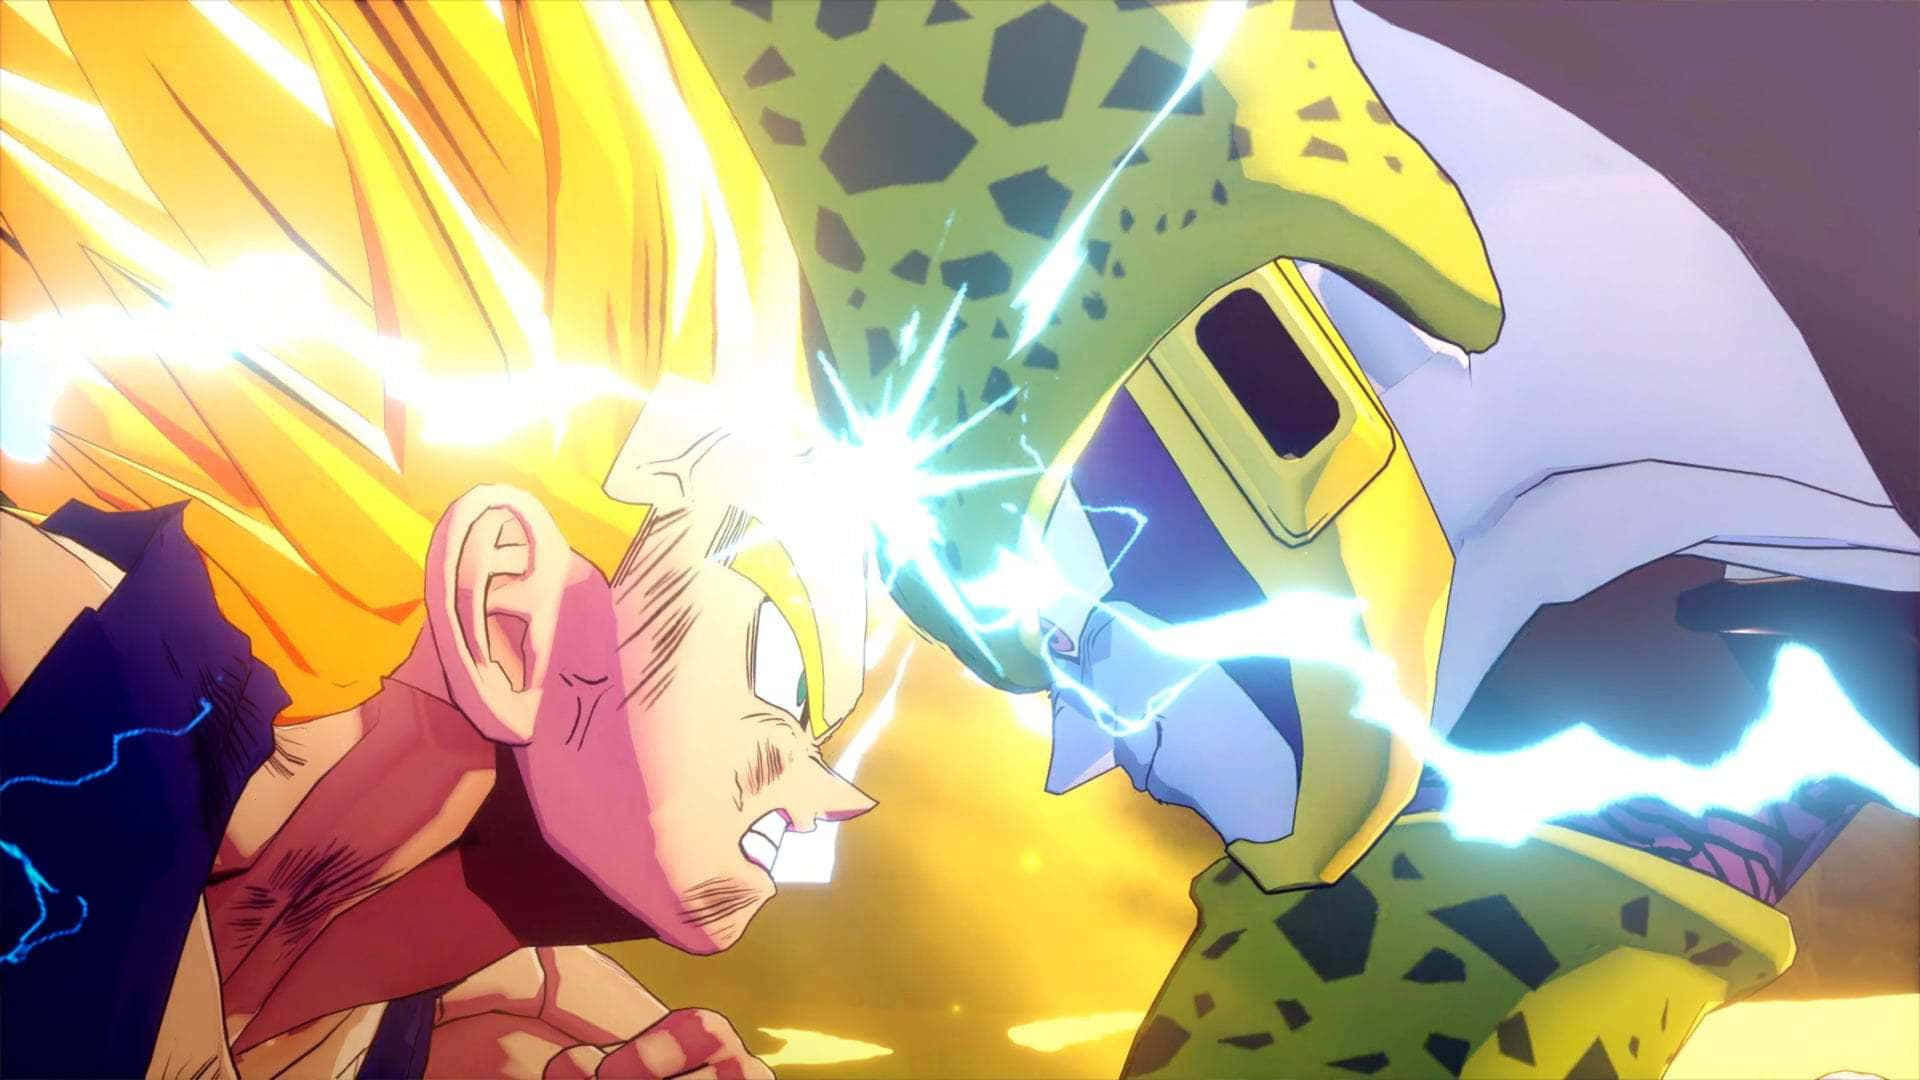 The Legendary Super Saiyan, Goku, unleashing his power in an epic battle in the Dragon Ball Z universe